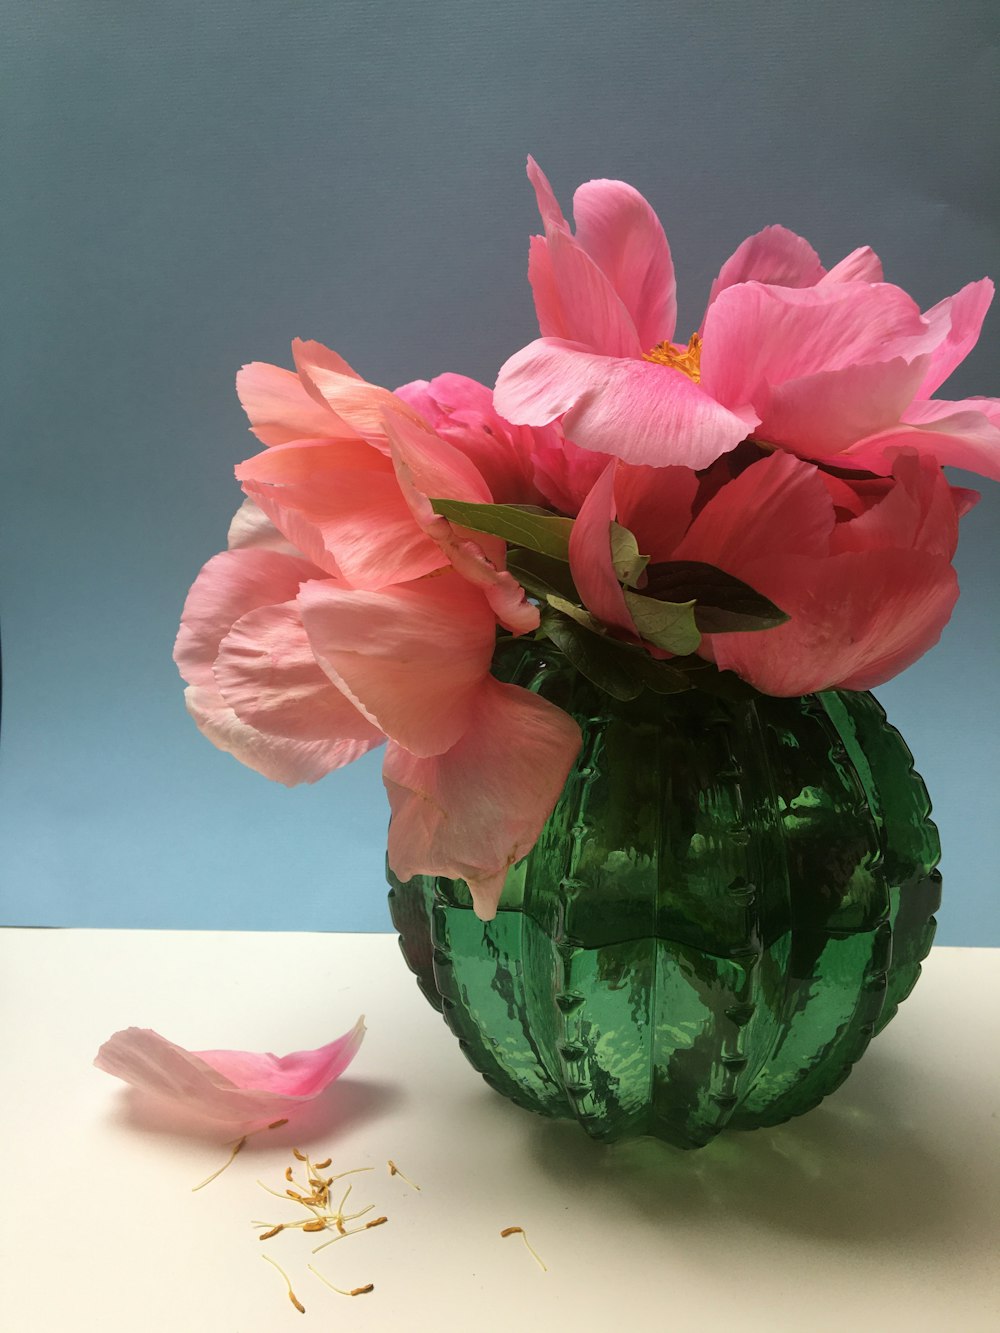 pink flower in green glass vase